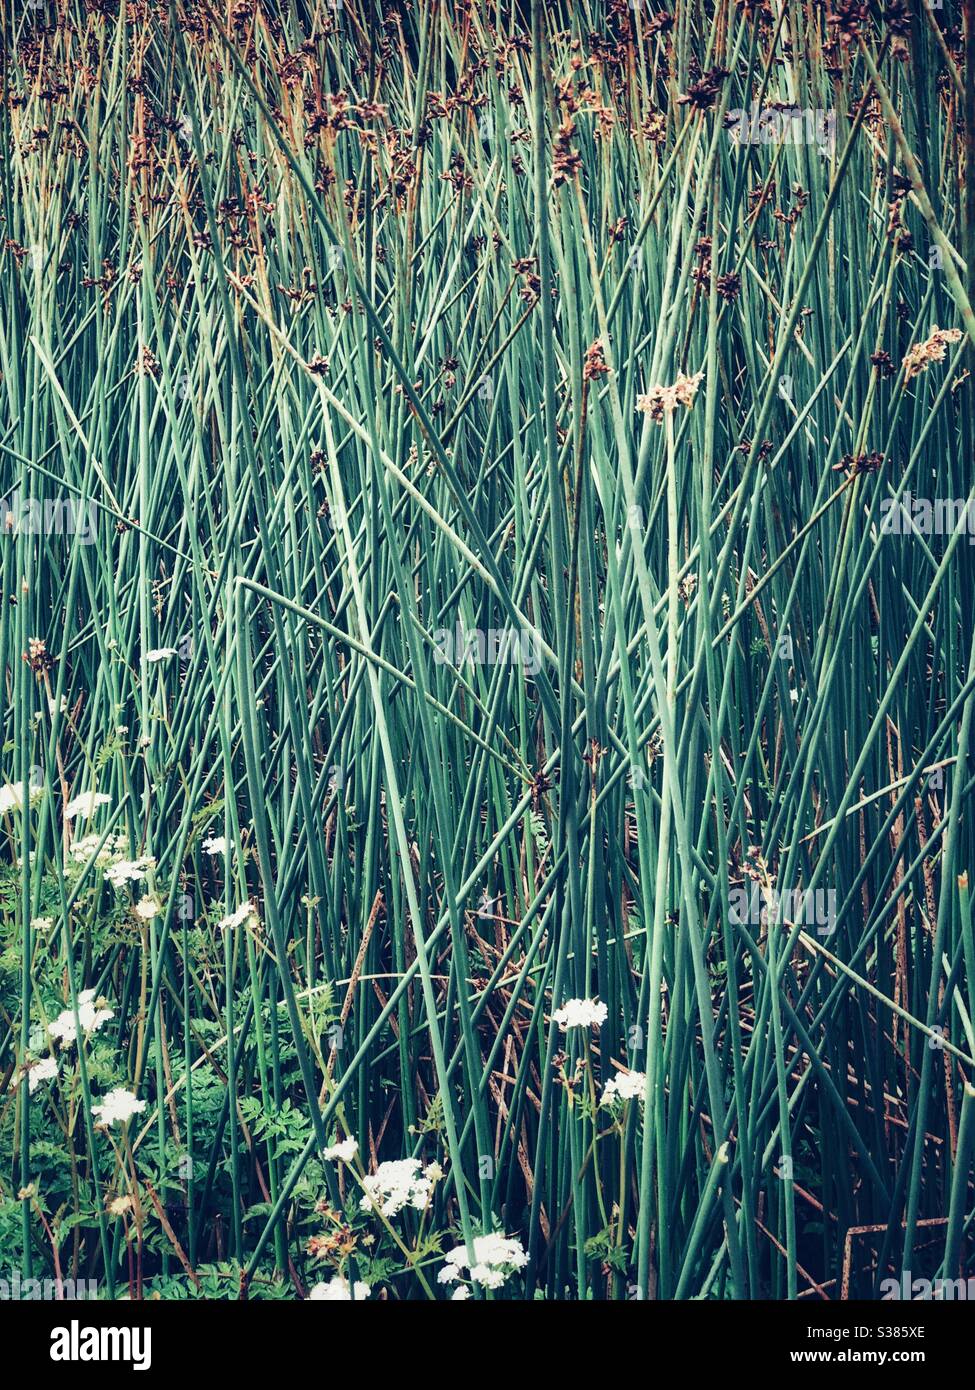 Lost in green tall grass field Stock Photo